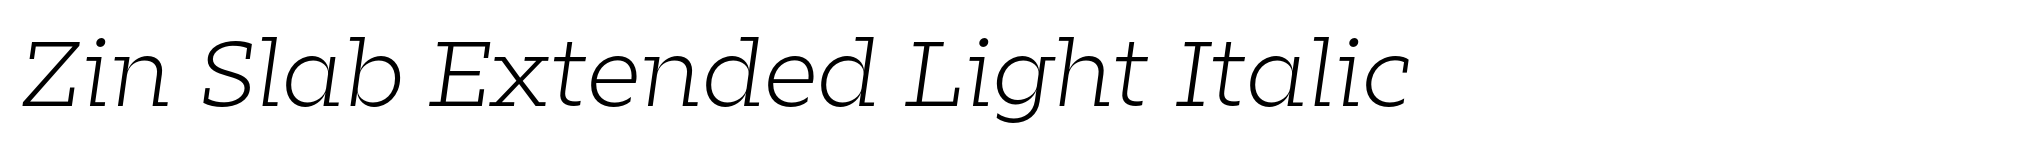 Zin Slab Extended Light Italic image